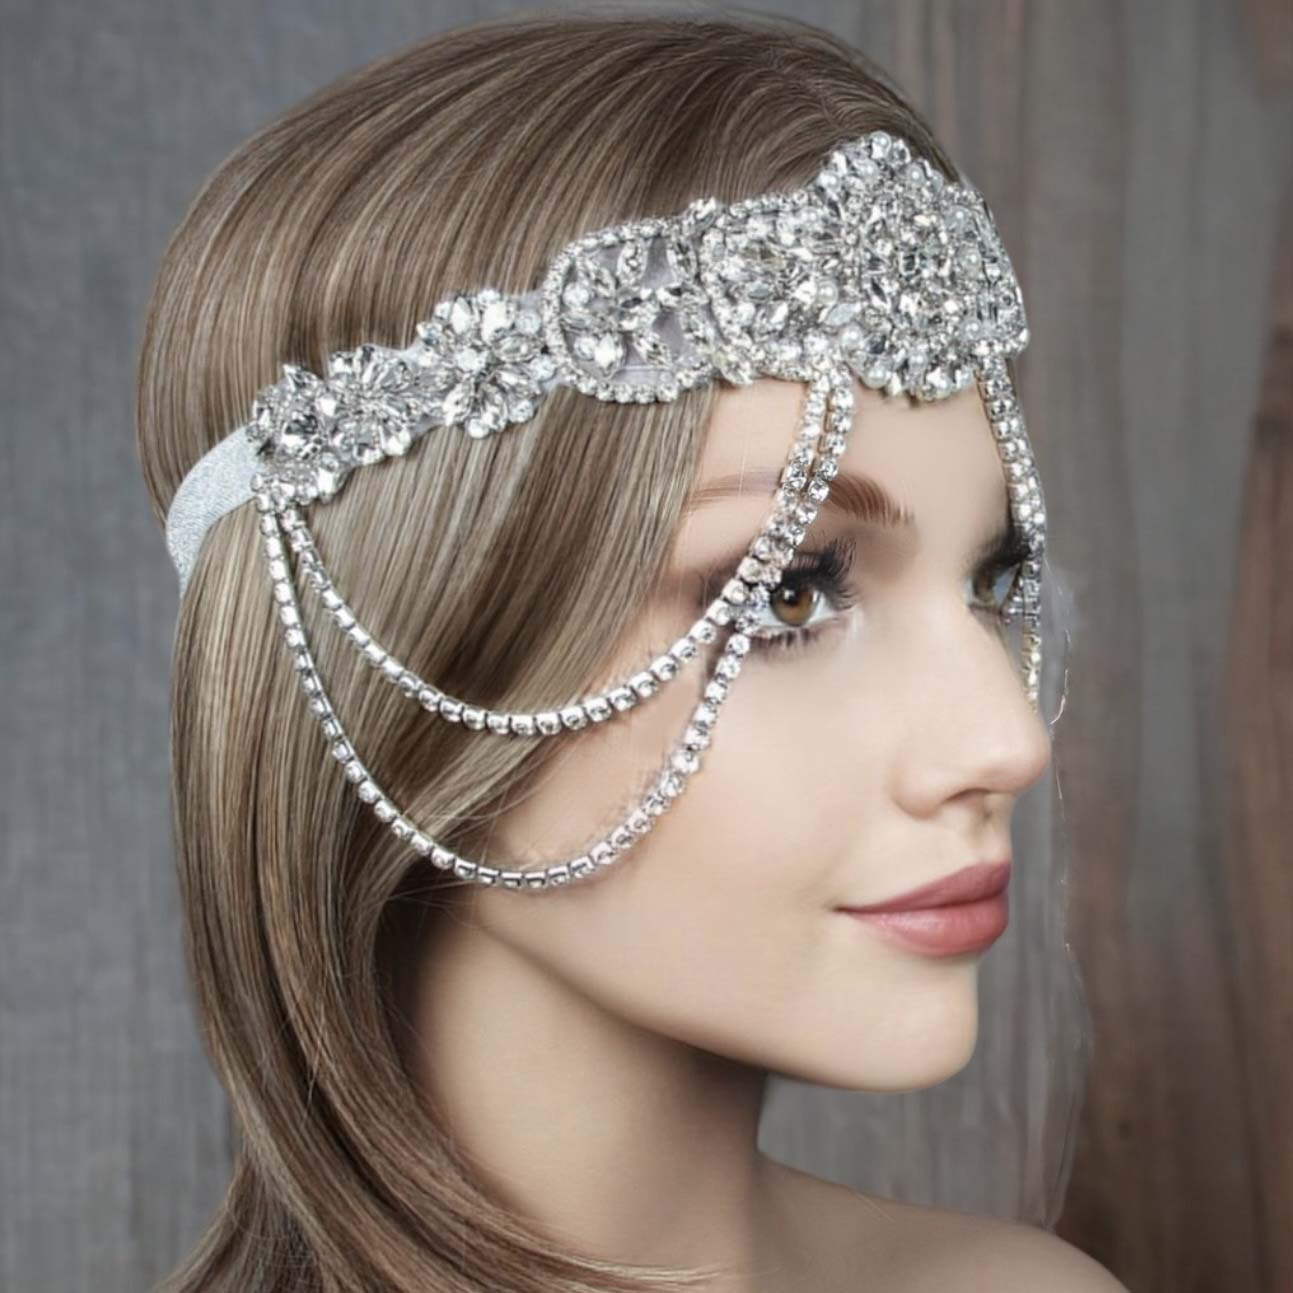 nevermindyrhead Wedding Headband Chain Head Jewelry Floral Hair Pieces Crystal Rhinestones Bling Chains Festival Halloween Costume Bridal Hair Accessories For Women Girls